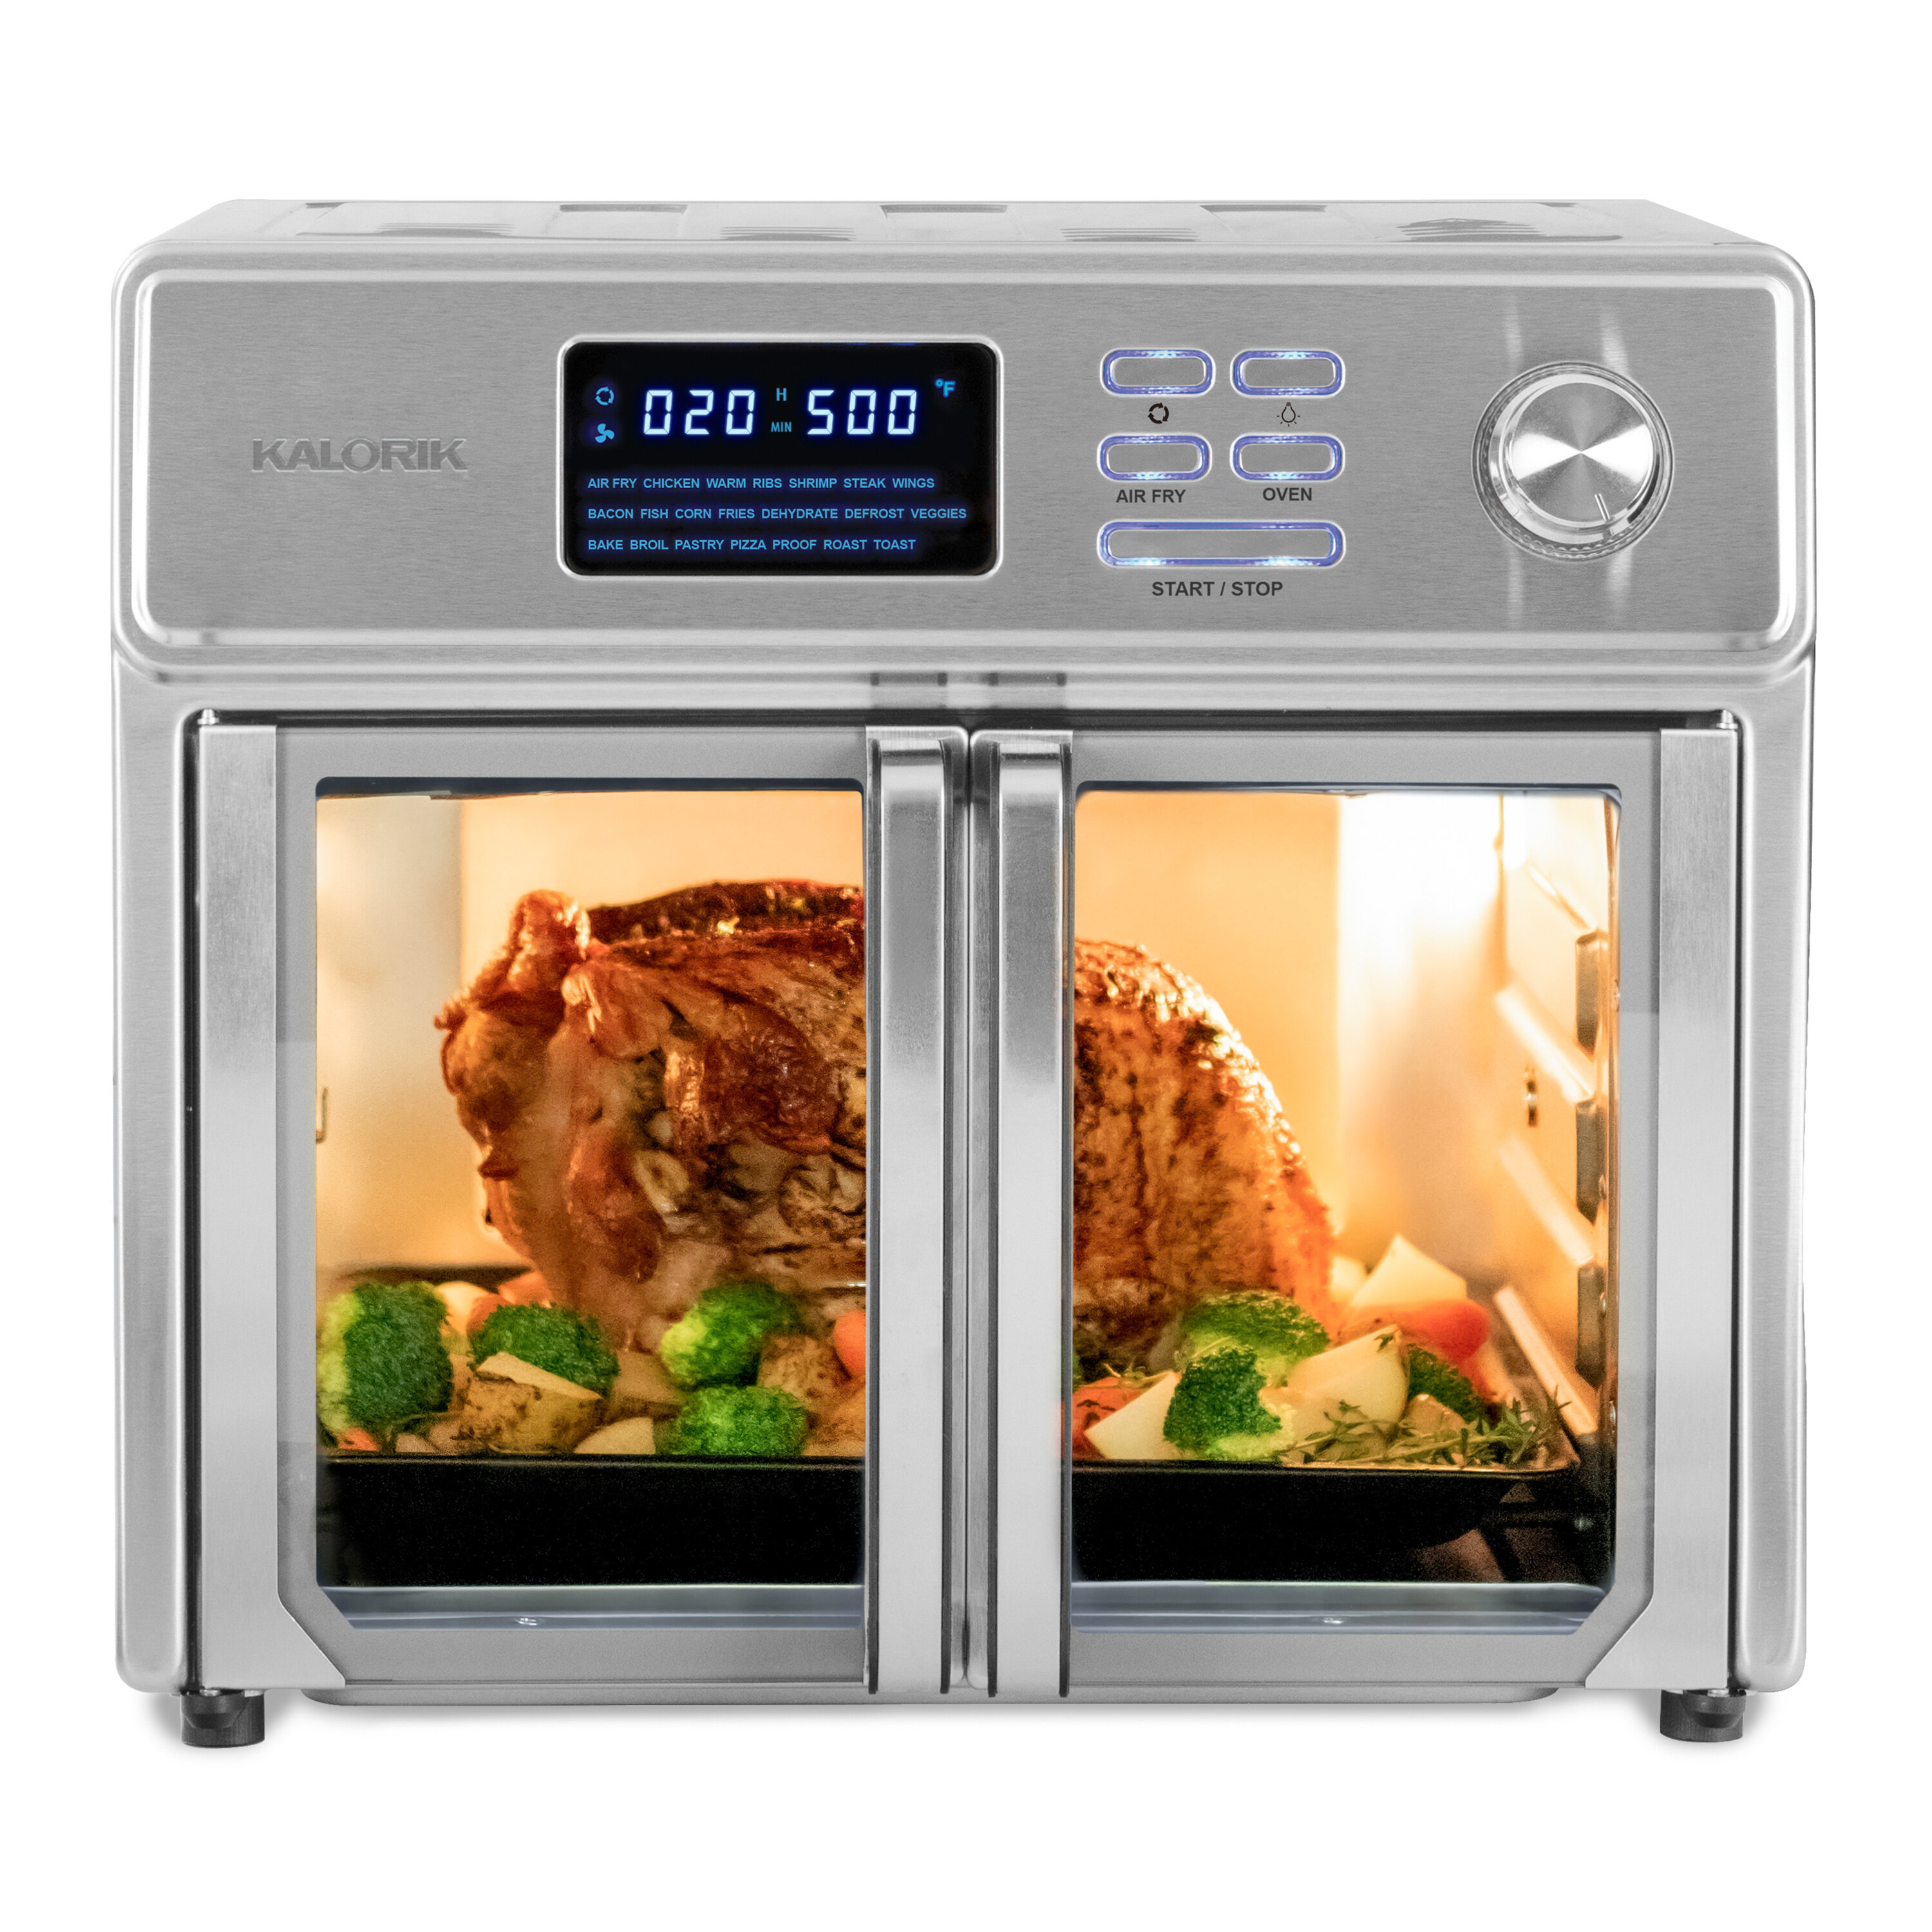 The Ninja Foodi Digital Air Fry Oven, Fryers, Furniture & Appliances